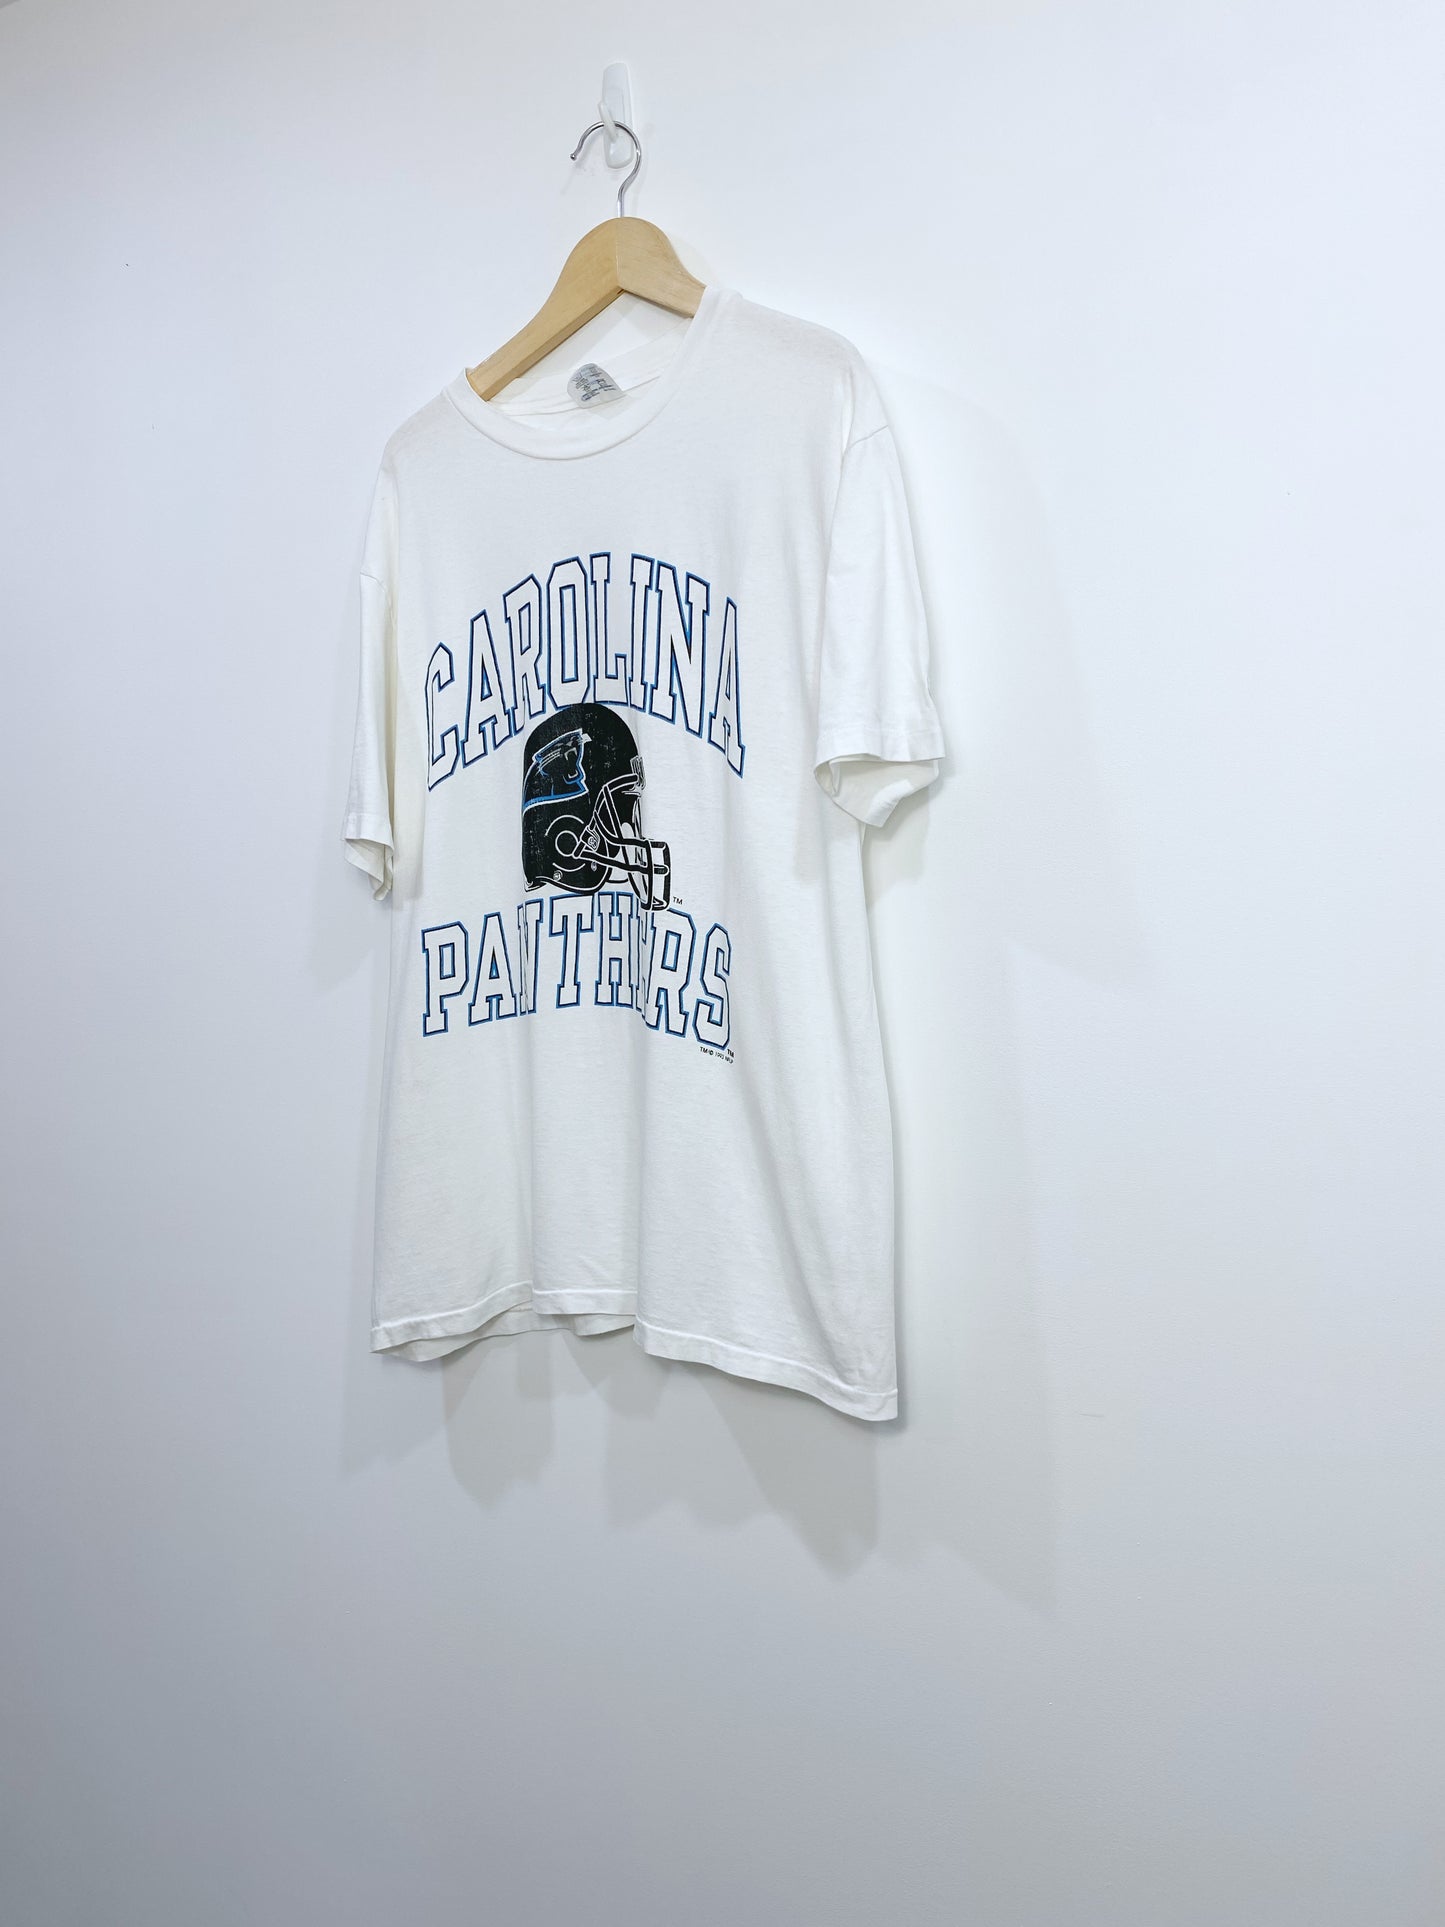 Vintage 1993 Carolina Panthers T-shirt L